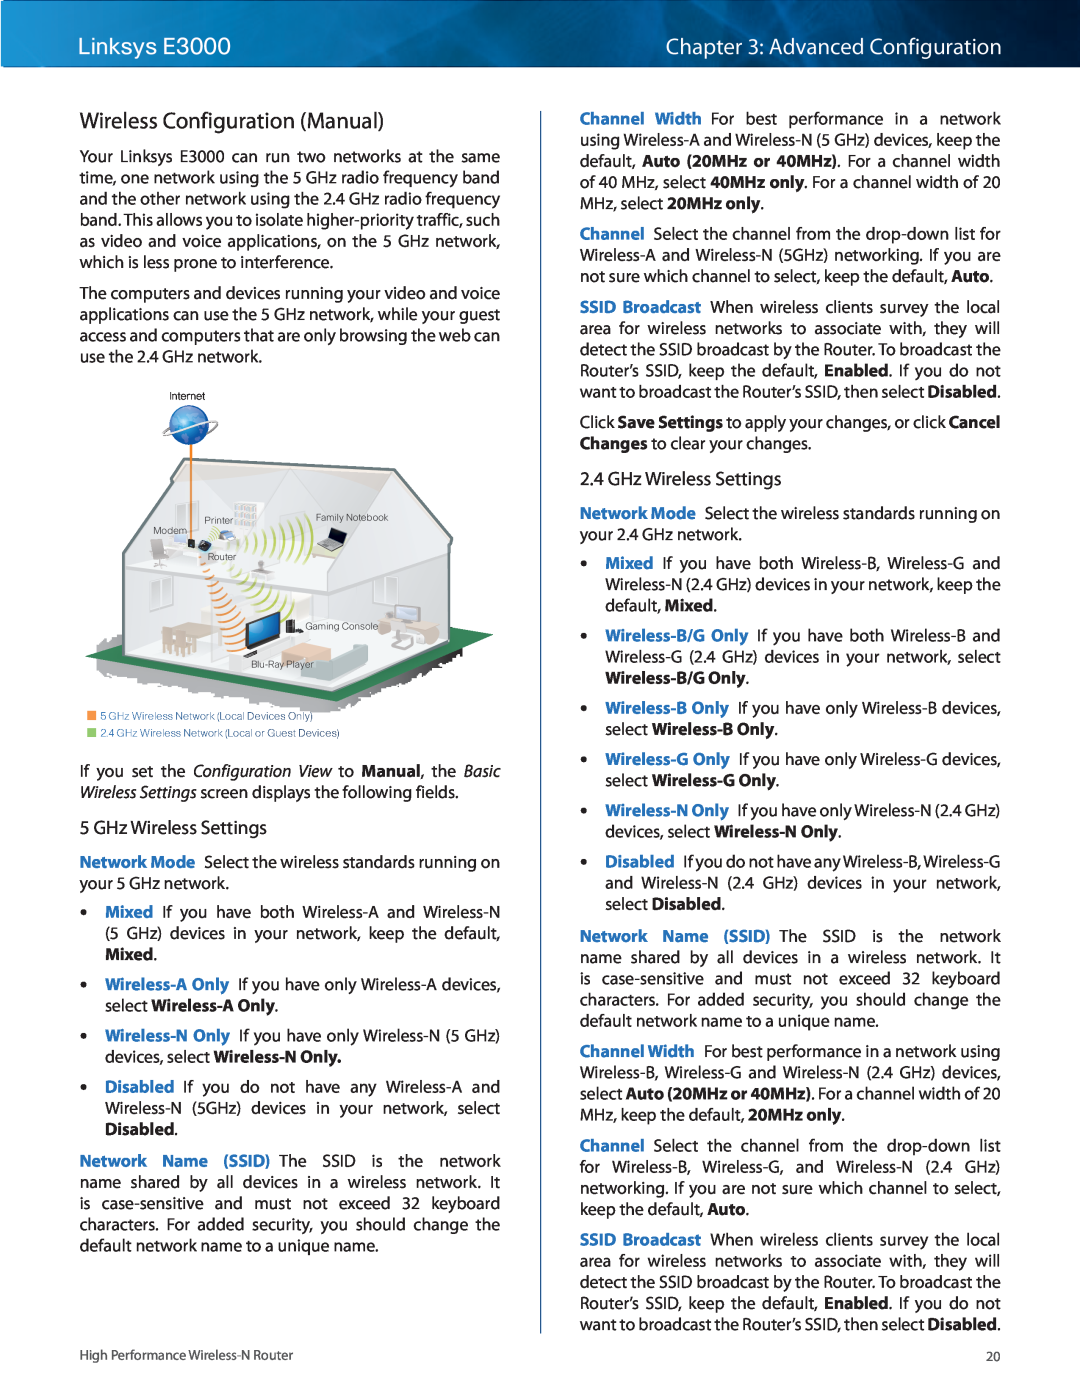 Linksys manual Wireless Configuration Manual, GHz Wireless Settings, Linksys E3000, Advanced Configuration 